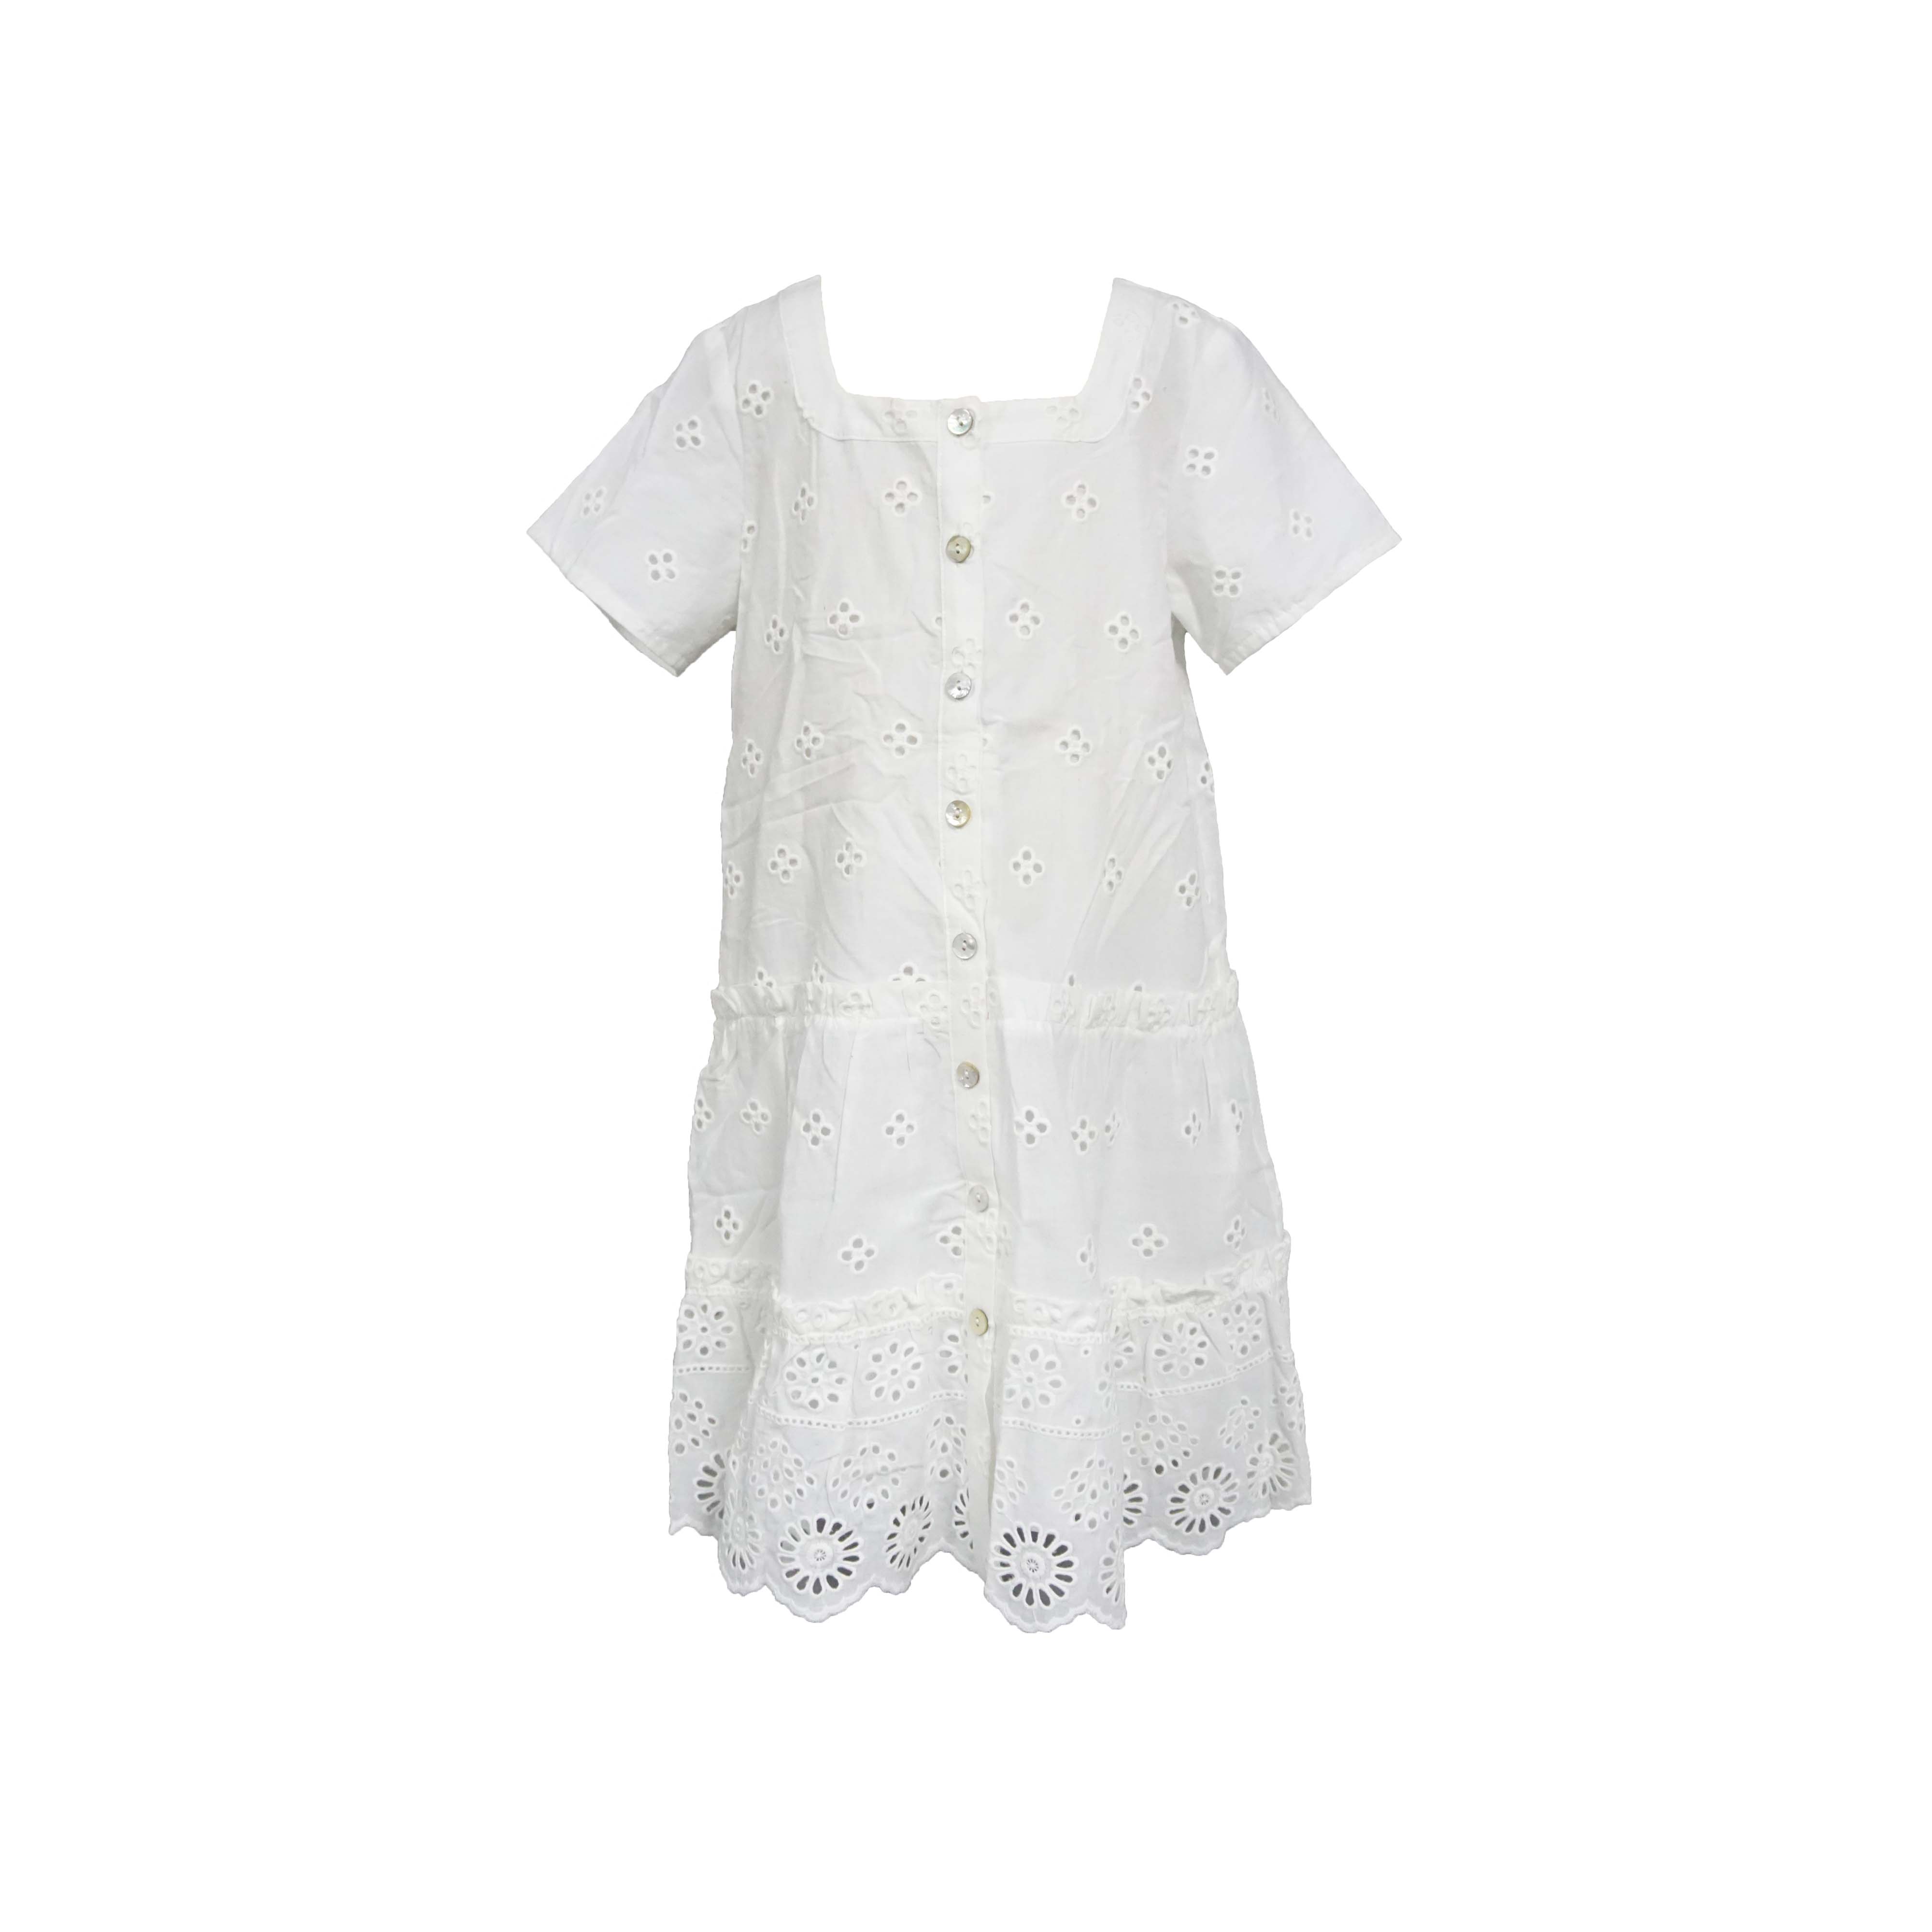  White cotton square neck short-sleeved dress